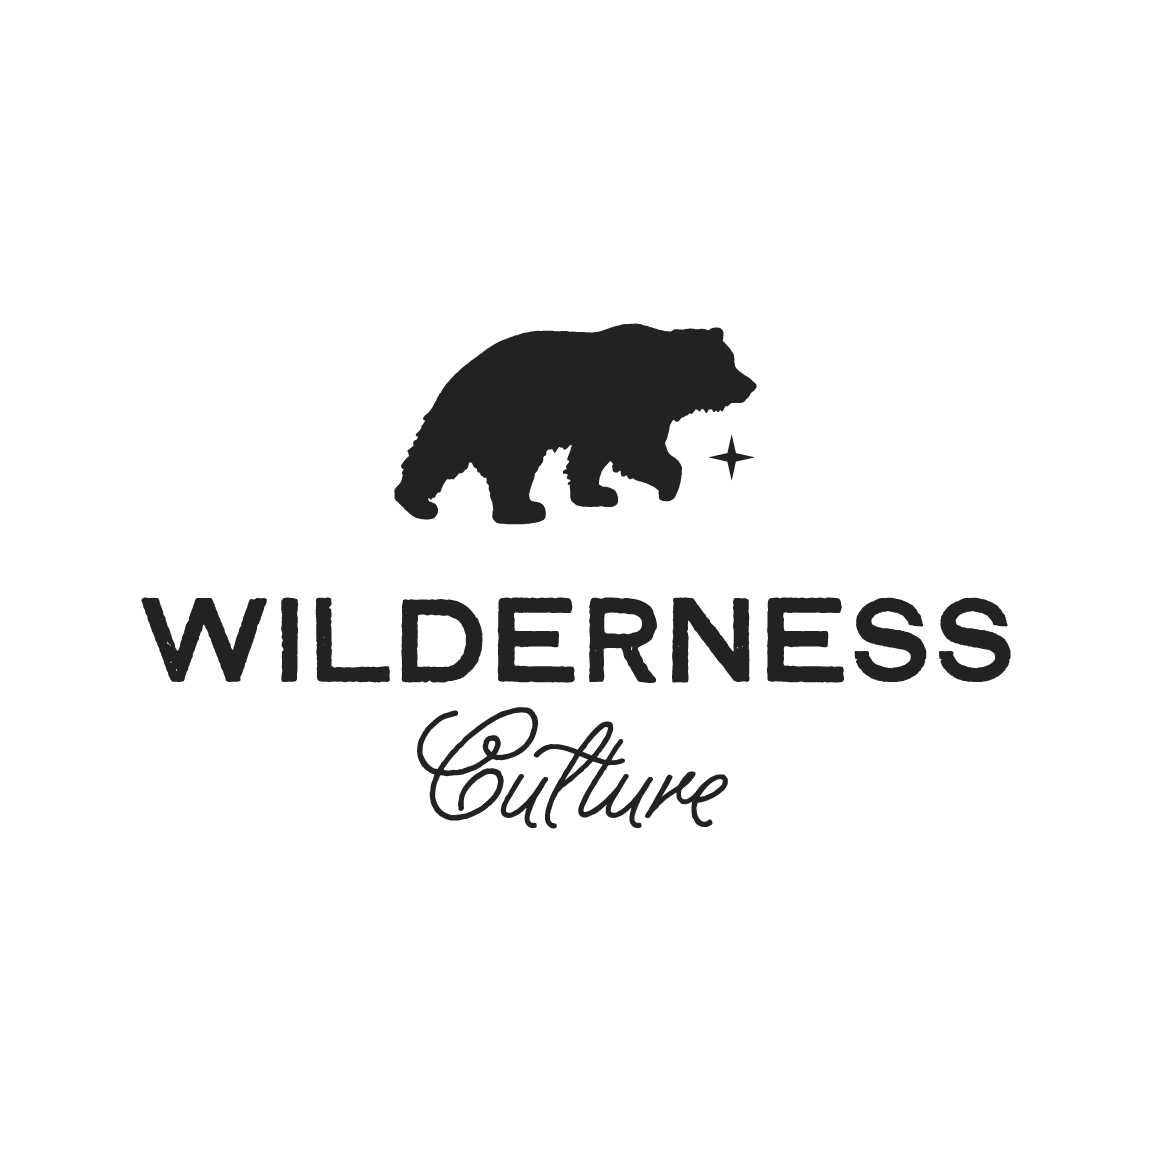 Wilderness Logo - Wilderness Culture - Affari Project Branding and Logo Design Project